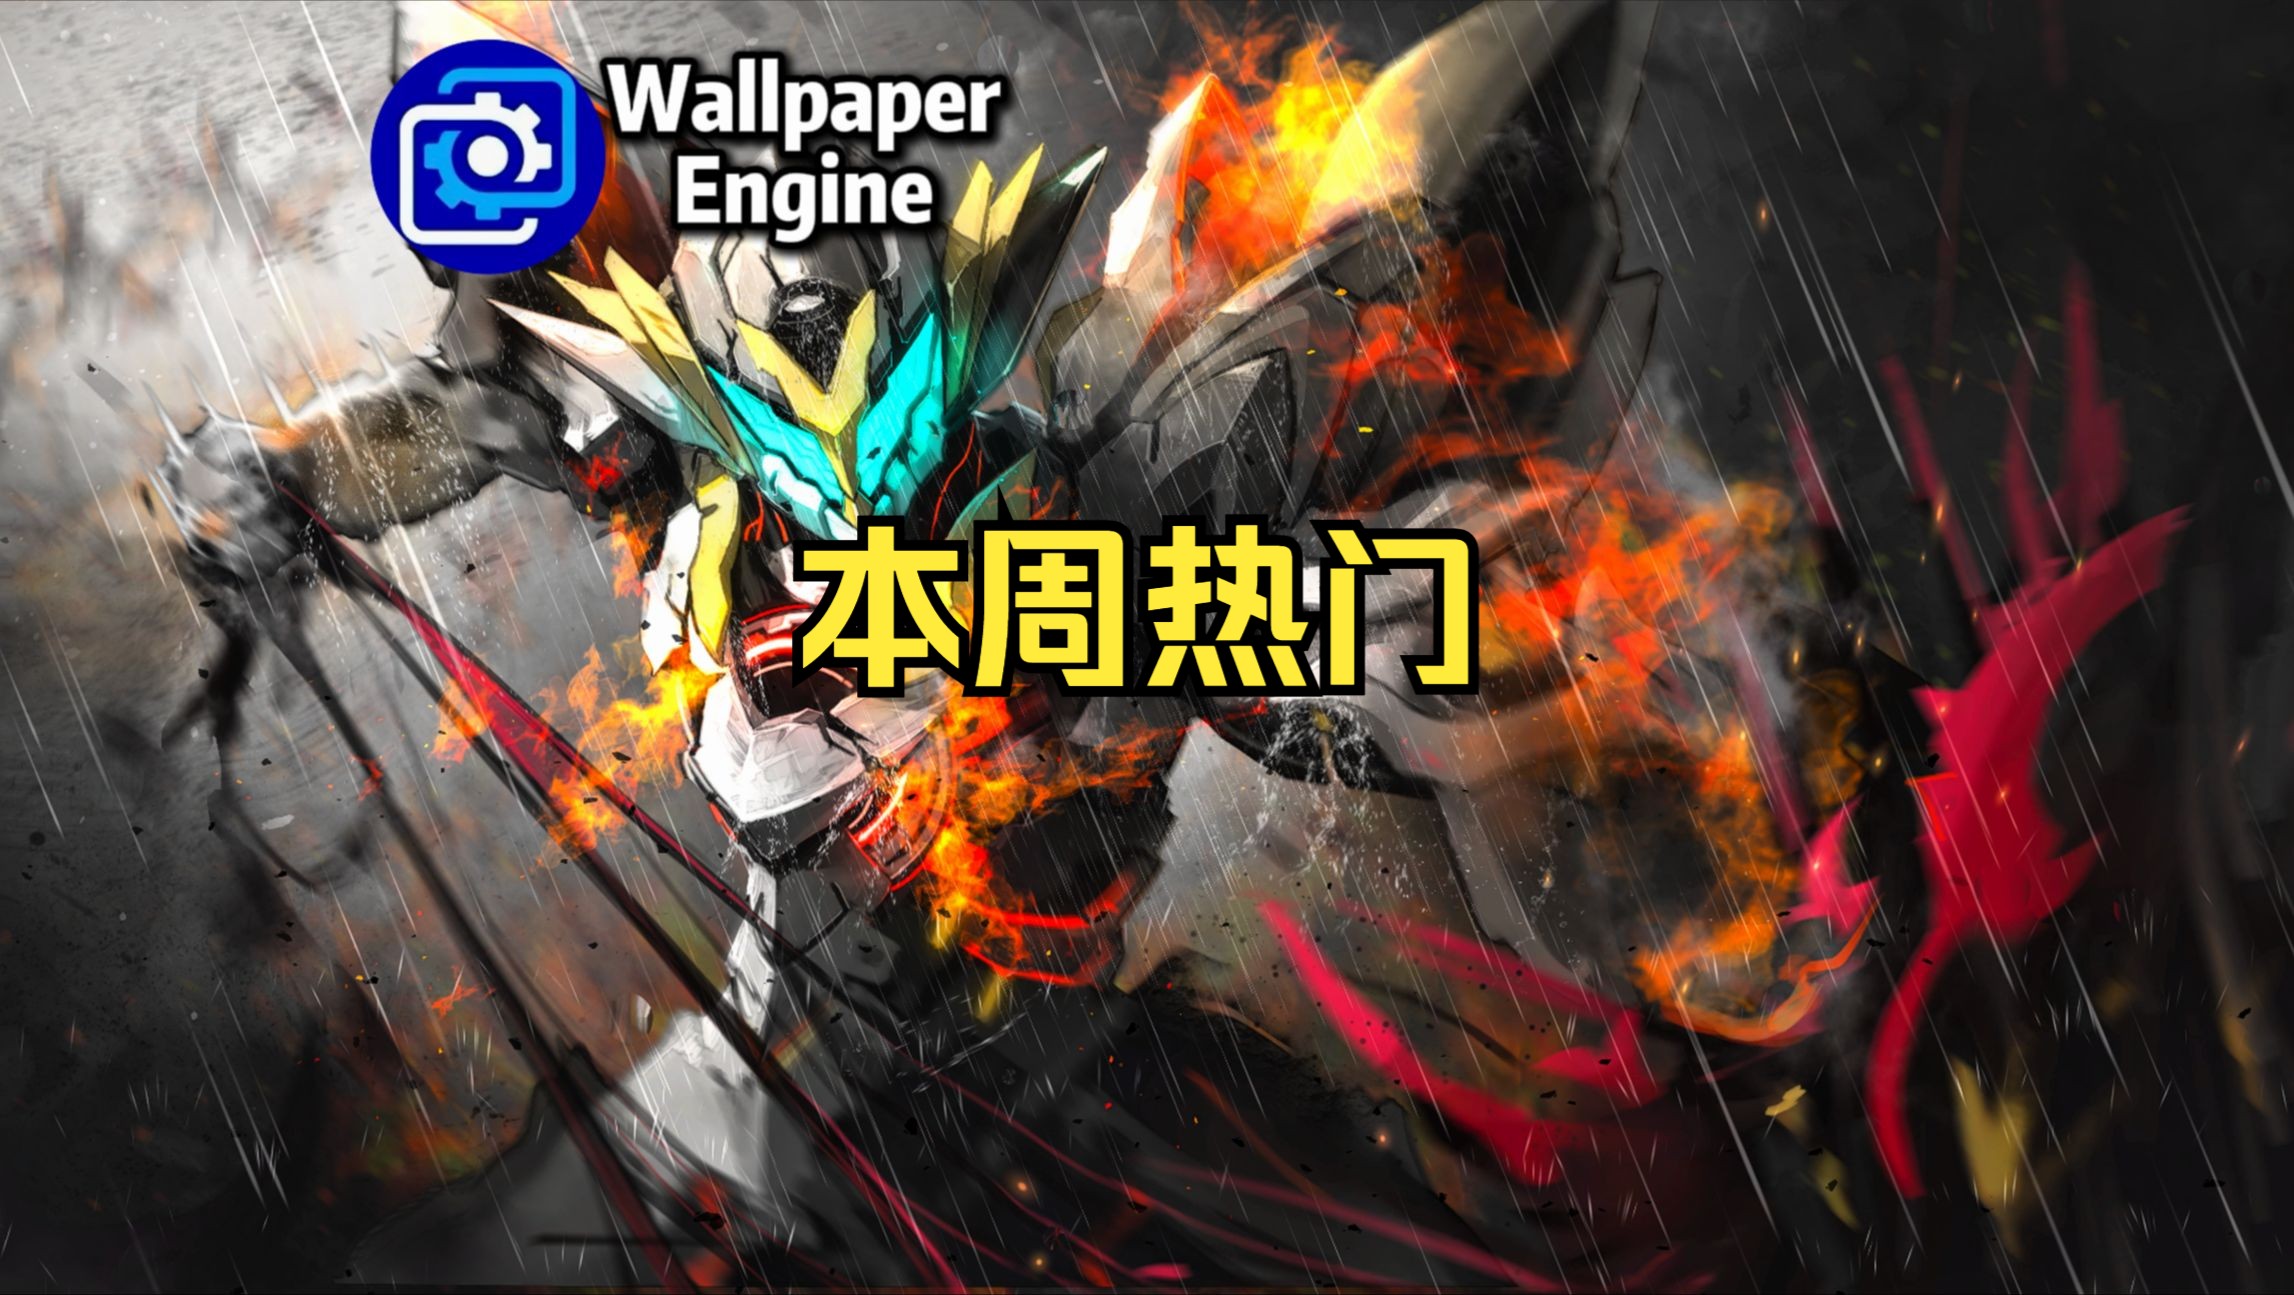 【Wallpaper Engine】壁纸推荐 本周热门